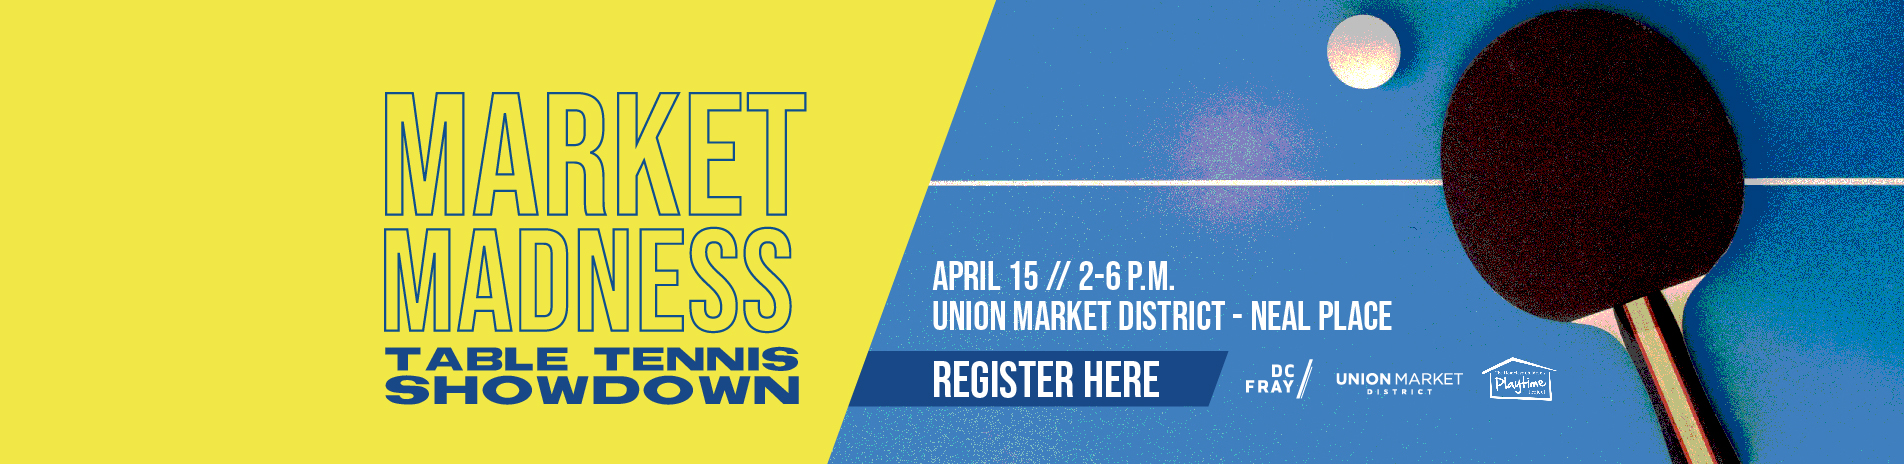 Register for Market Madness Table Tennis Showdown